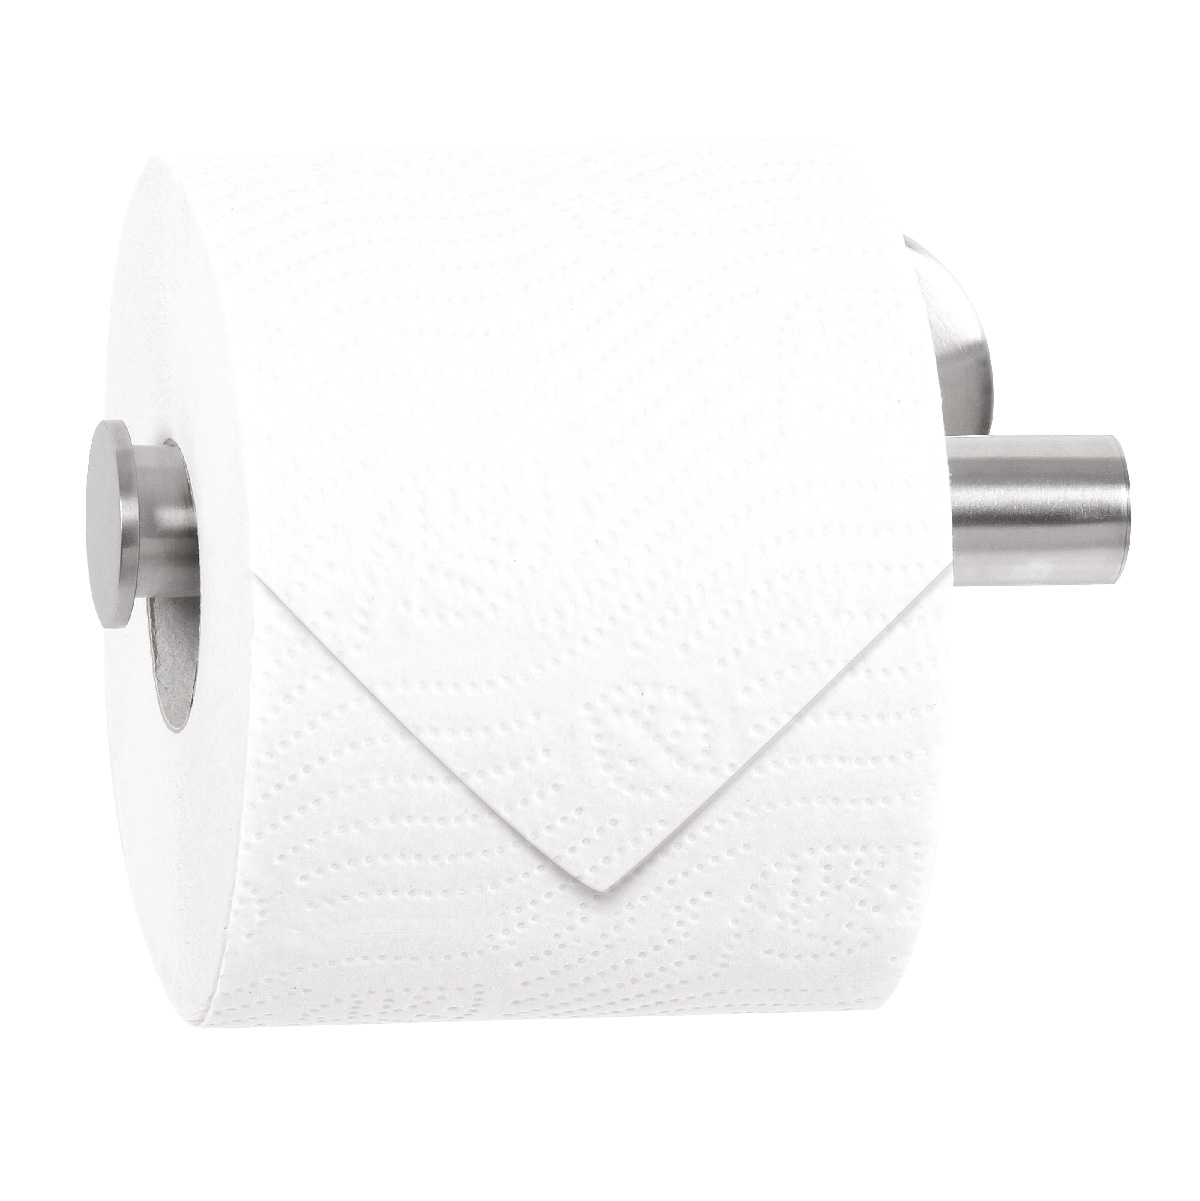 Bad-Serie PIAZZA - Toilettenpapierhalter 2 in 1, Edelstahl matt